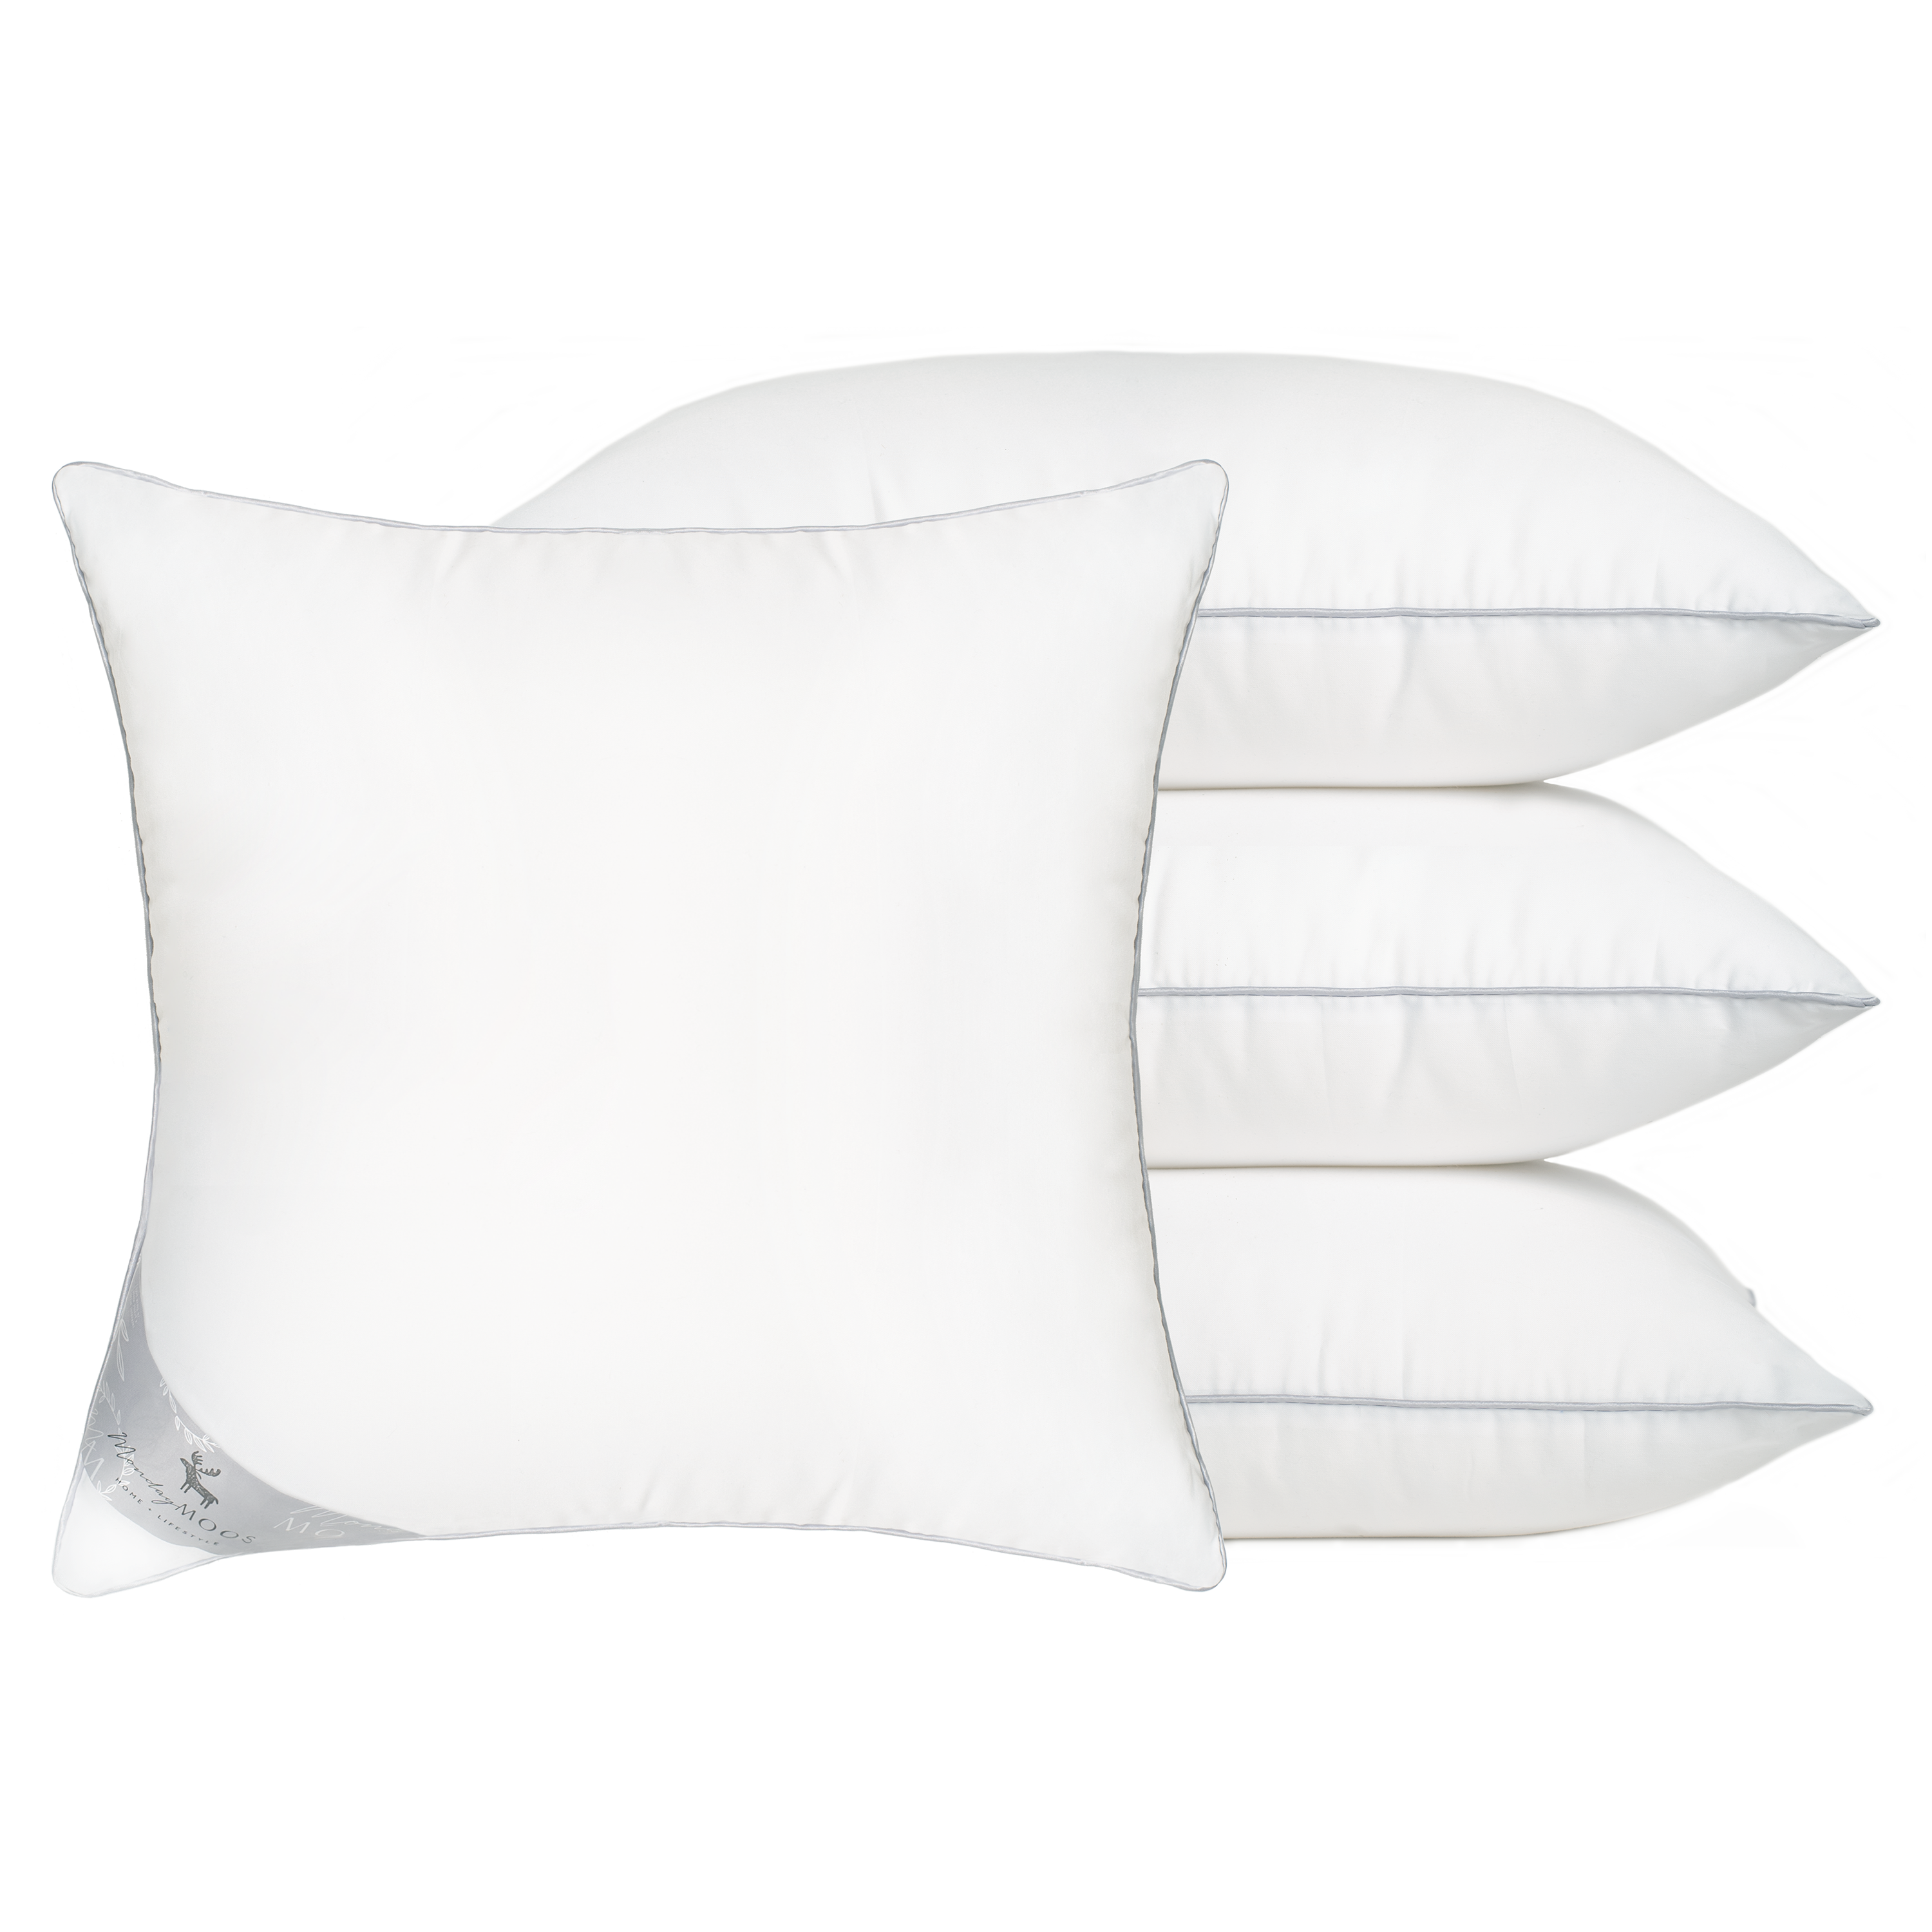 2 AVOE Throw Pillow Inserts Hypoallergenic Premium Sham Stuffer